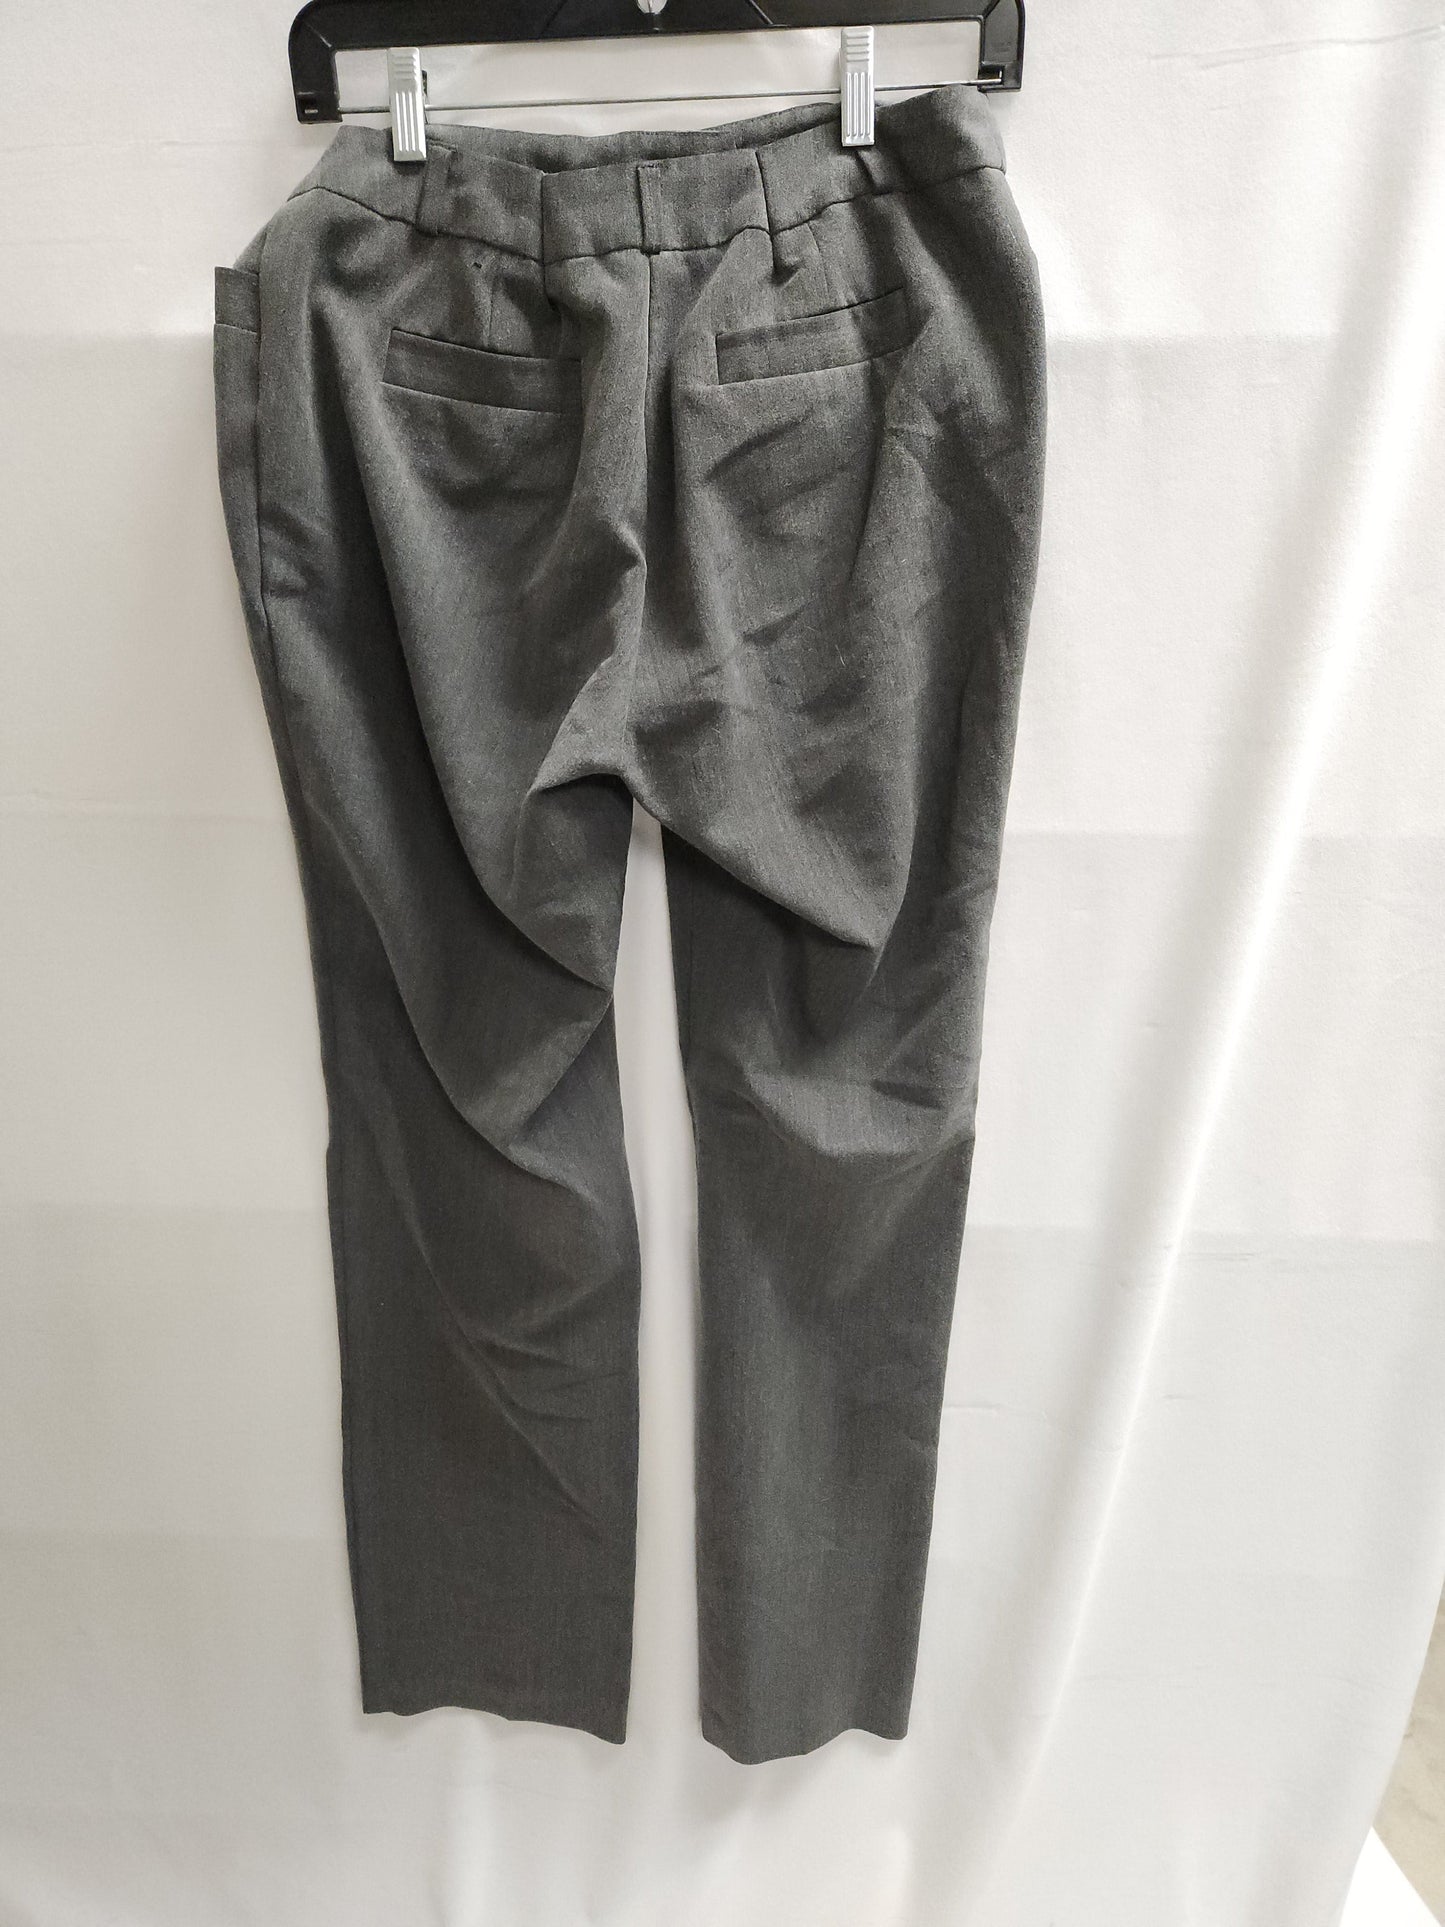 Pants Work/dress By Soho Design Group  Size: 6